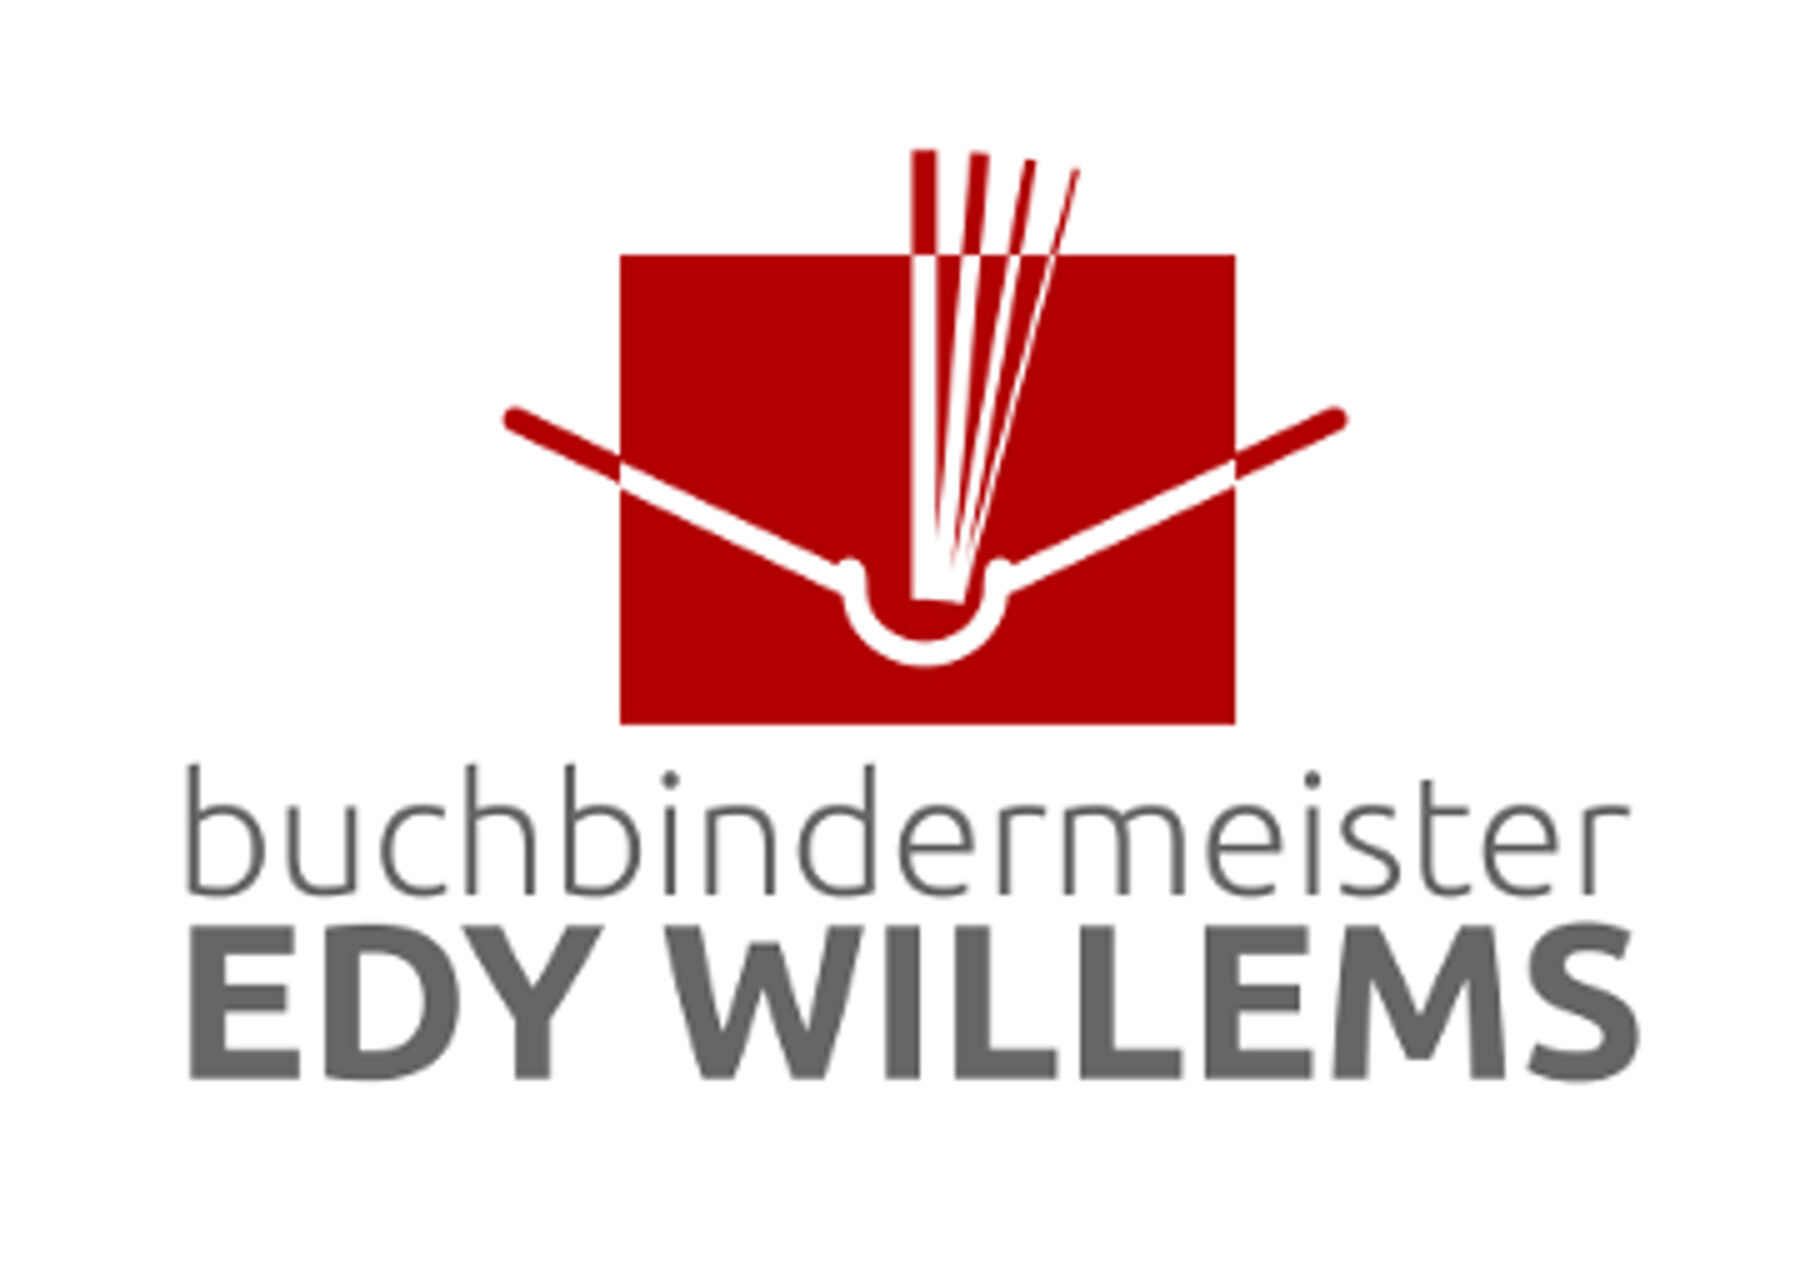 Edy Willems Buchbindermeister